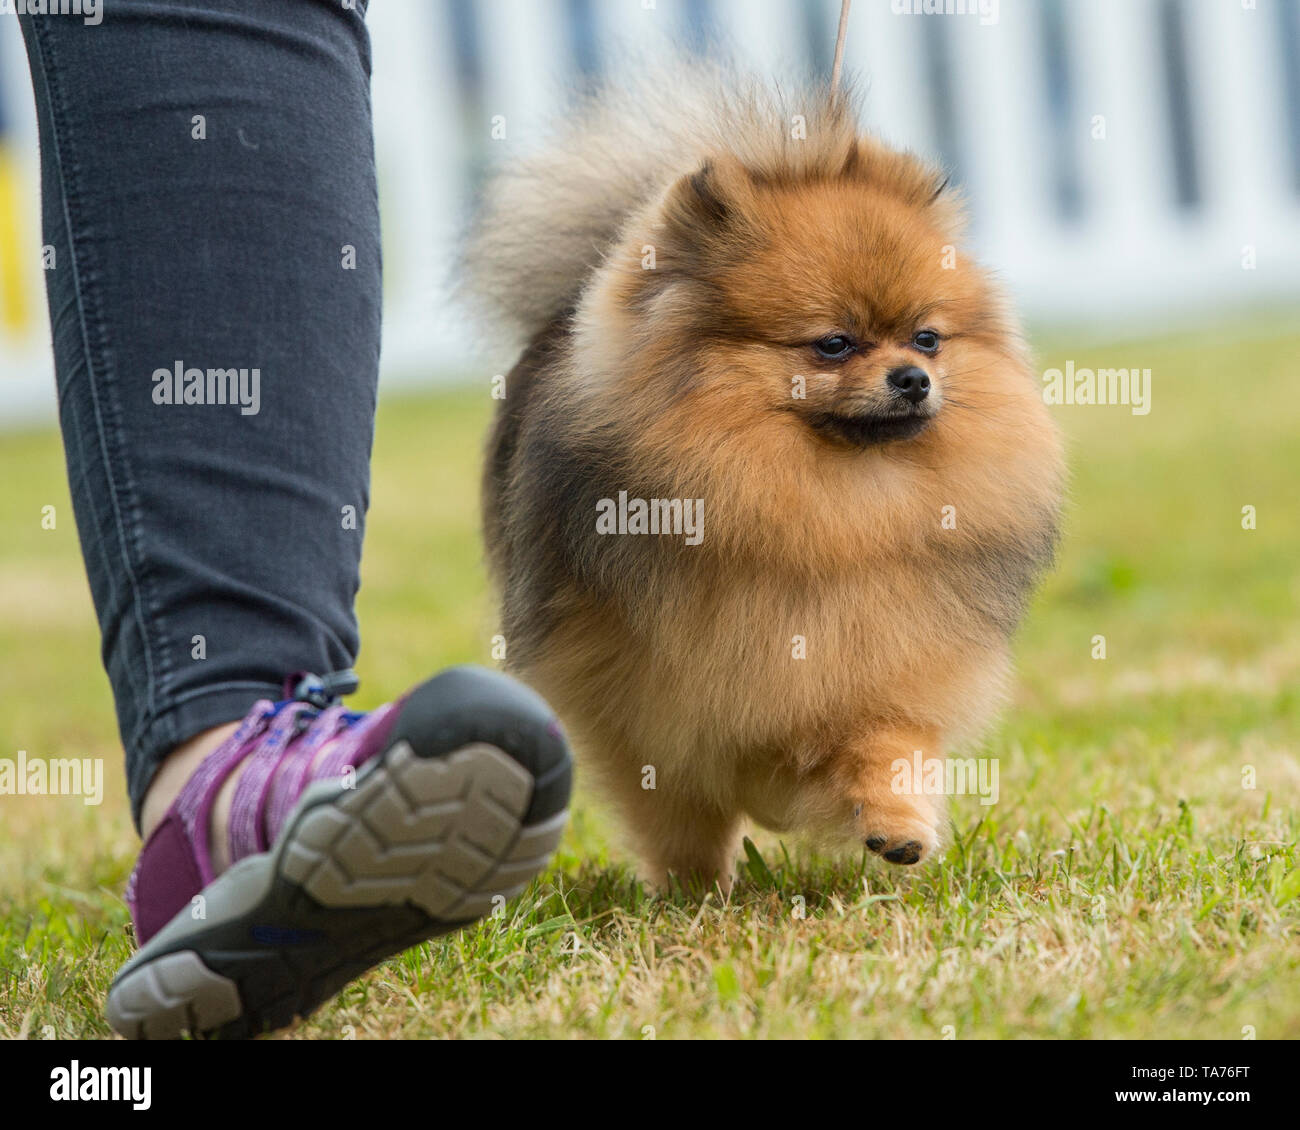 pomeranian dog and owner Stock Photo